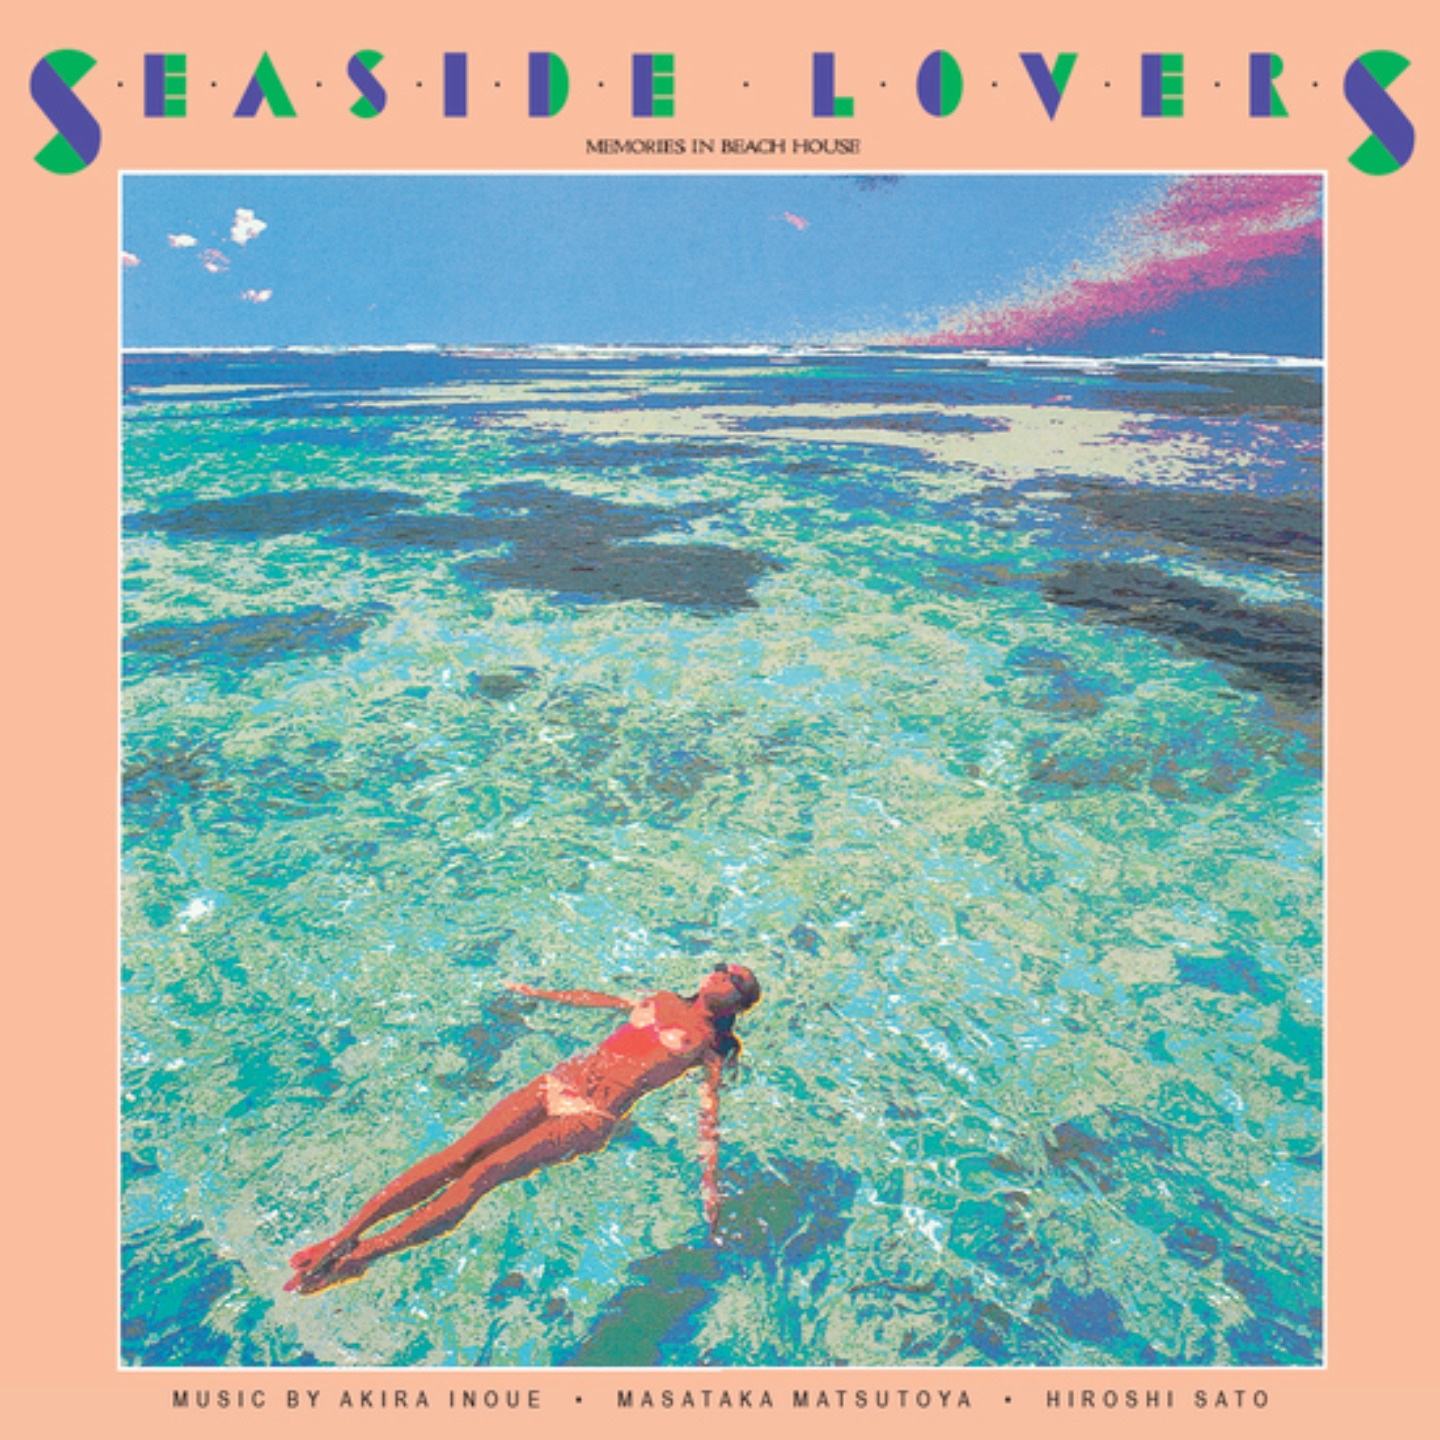 MASATAKA MATSUTOYA, AKIRA INOUE & HIROSHI SATO - Seaside Lovers - Memories In Beach House LP (Emerald Green Vinyl) 